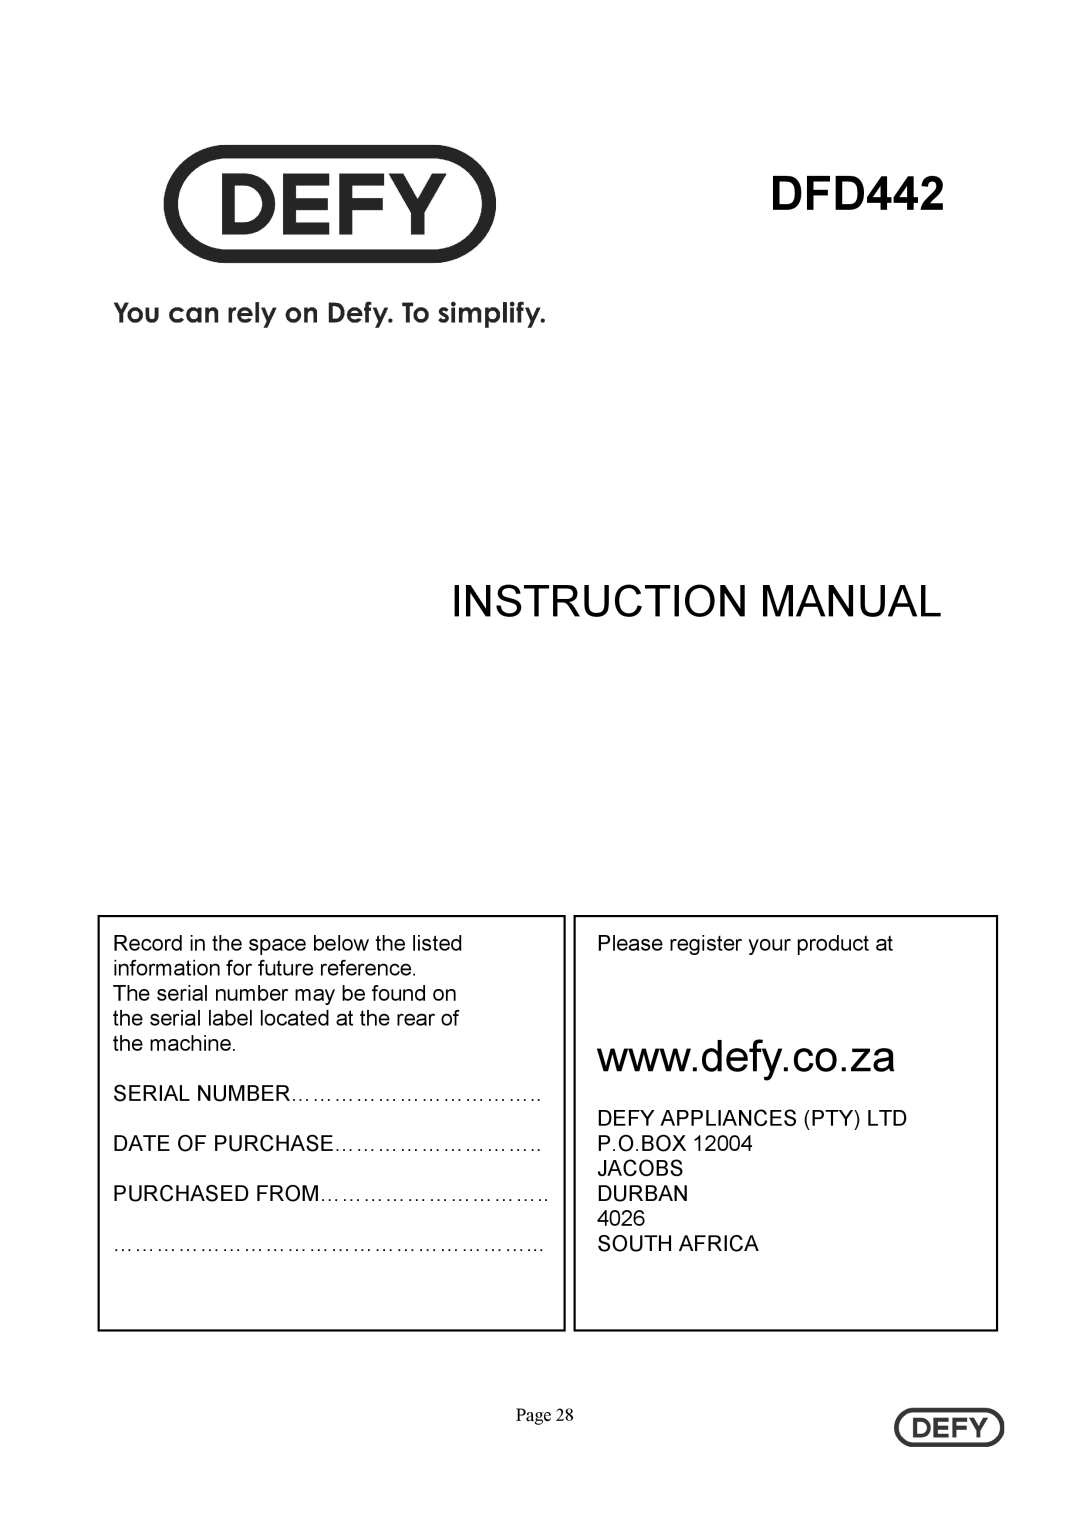 Defy Appliances DFD442 instruction manual 